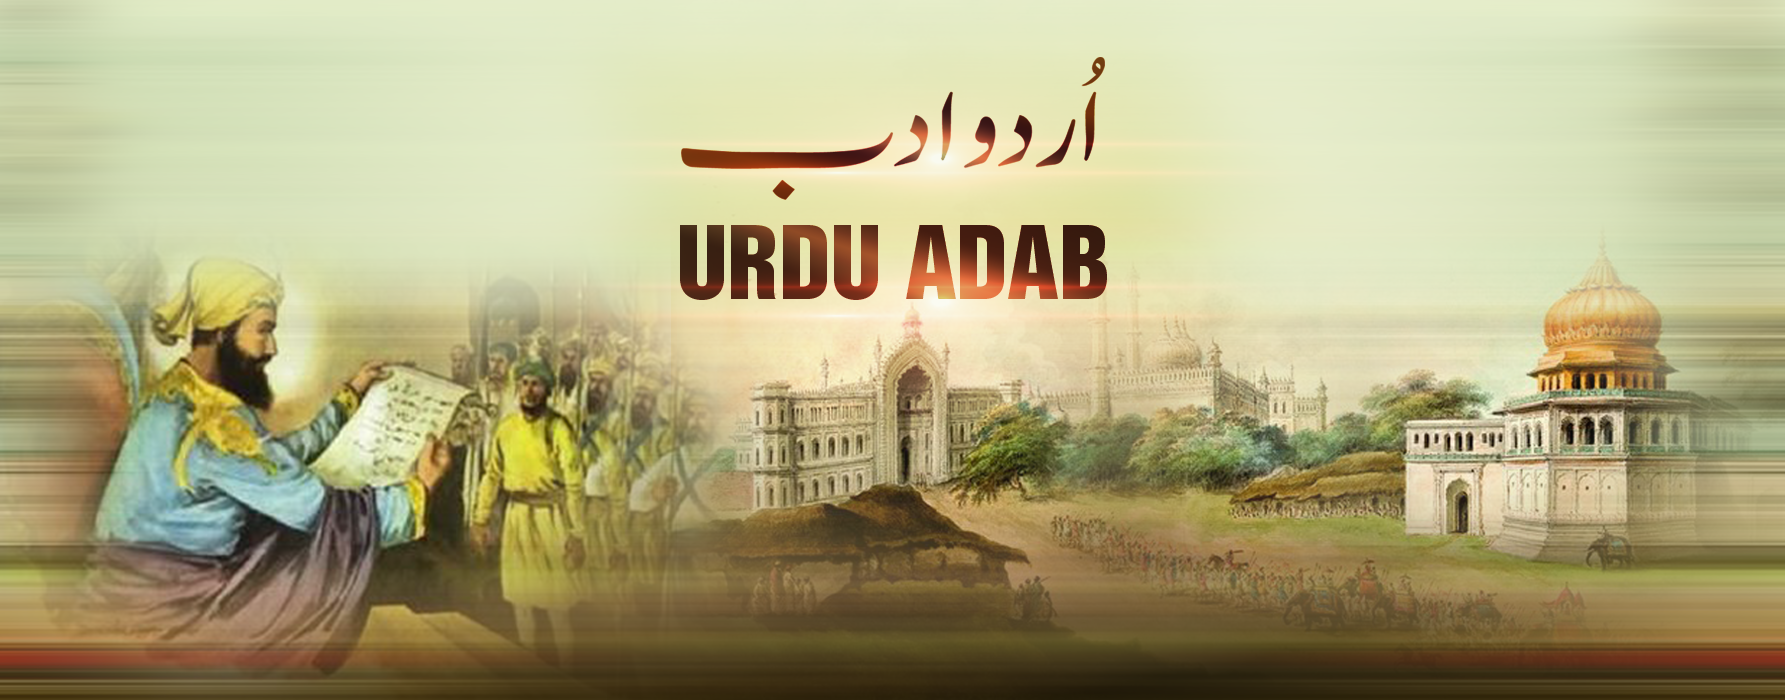 # 65  Hades-e-dil fagaar حدیث دل فگار | Urdu Adab